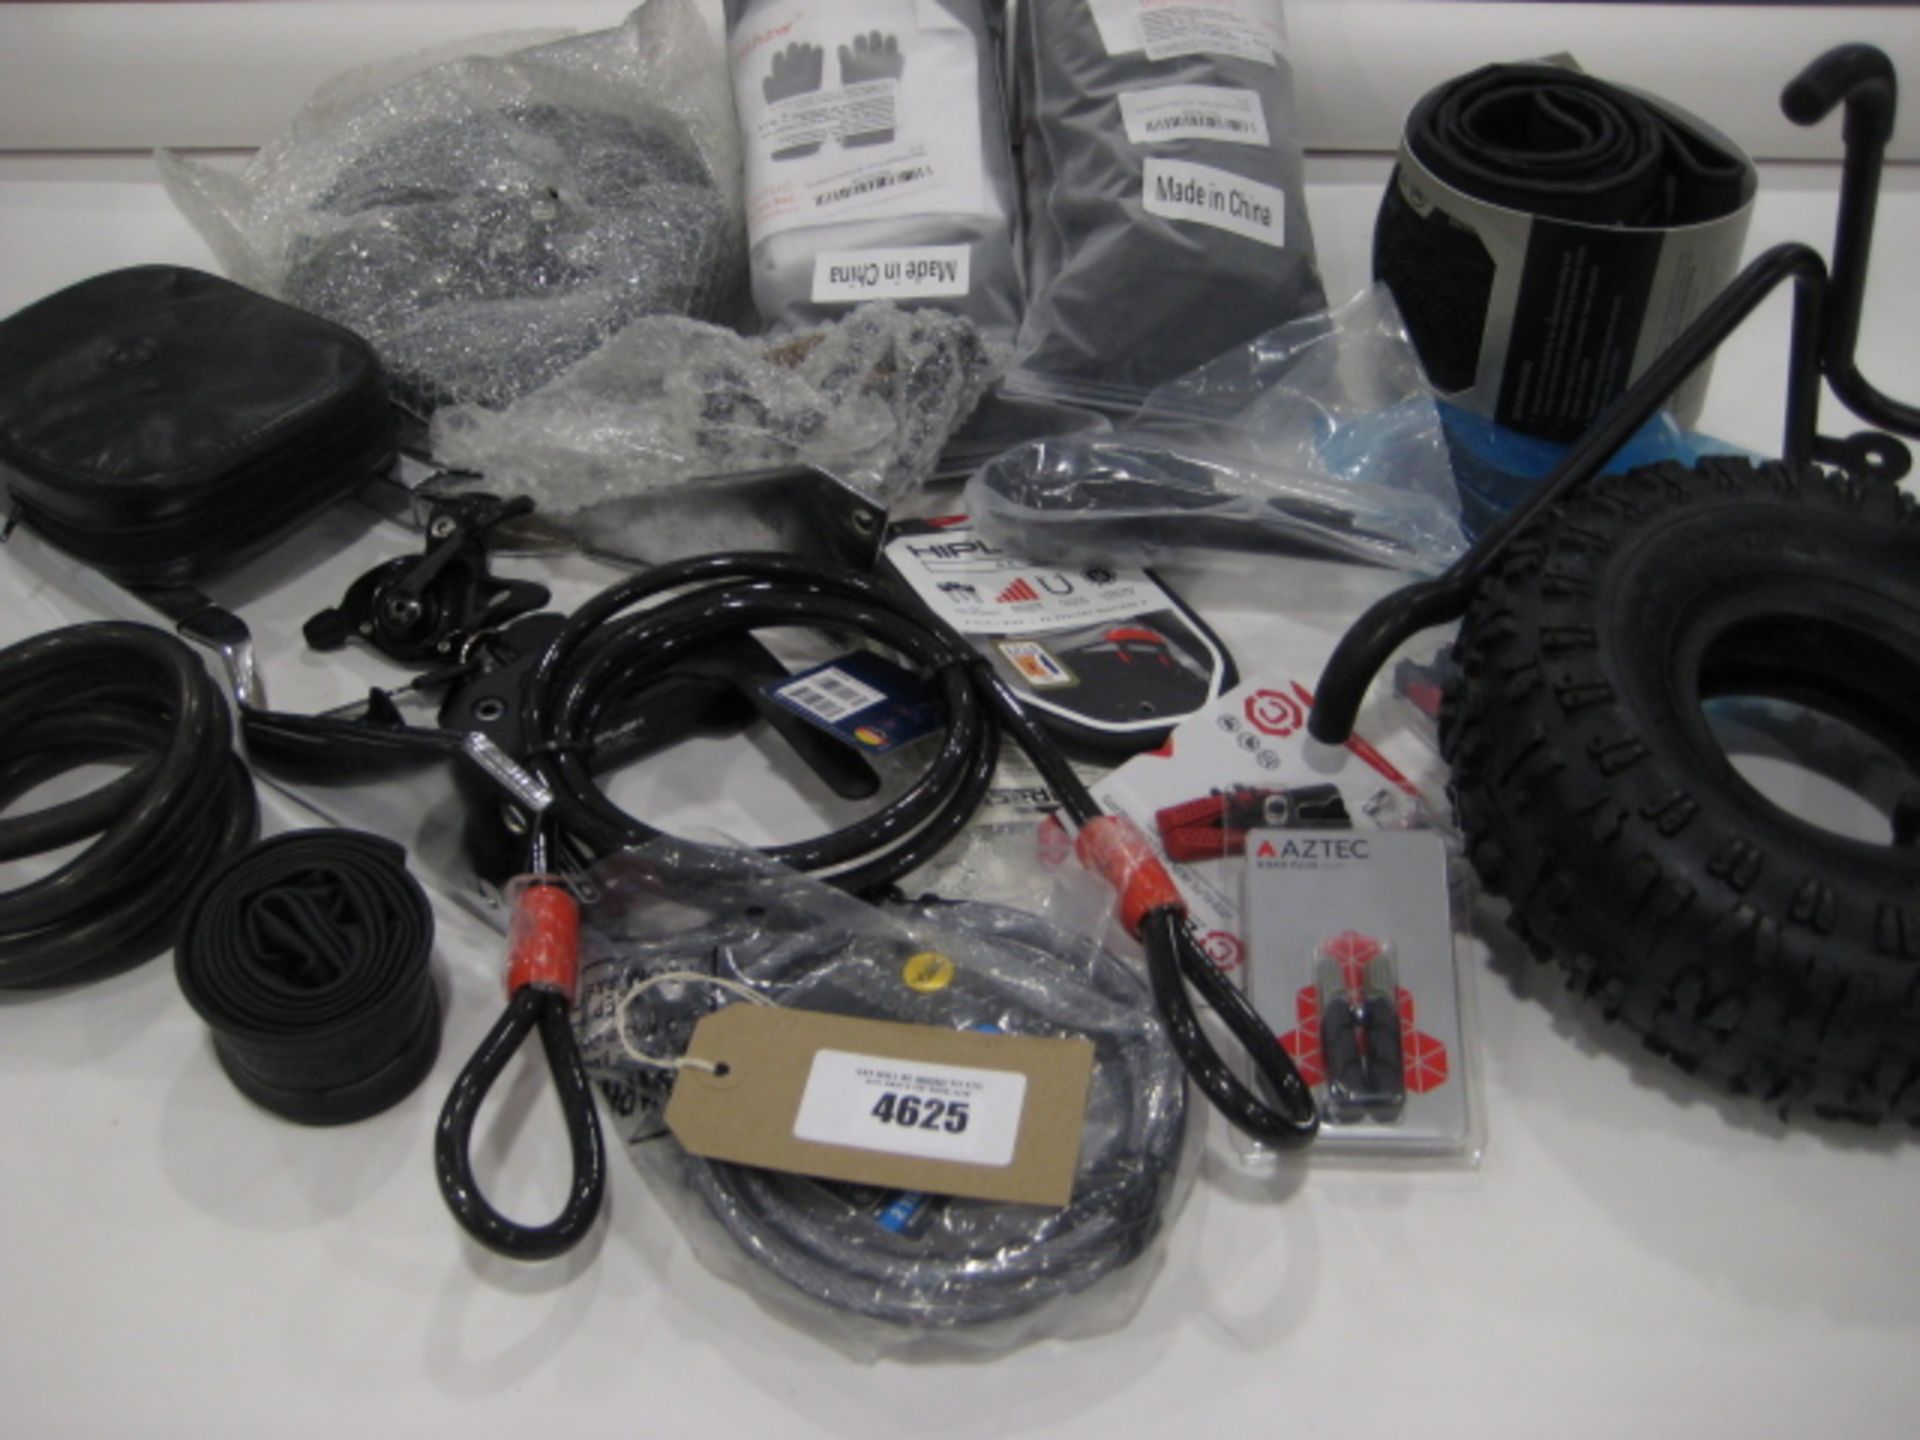 Bag containing bike and motorbike parts including tyres, locks, brake levers, racks, seats, inner